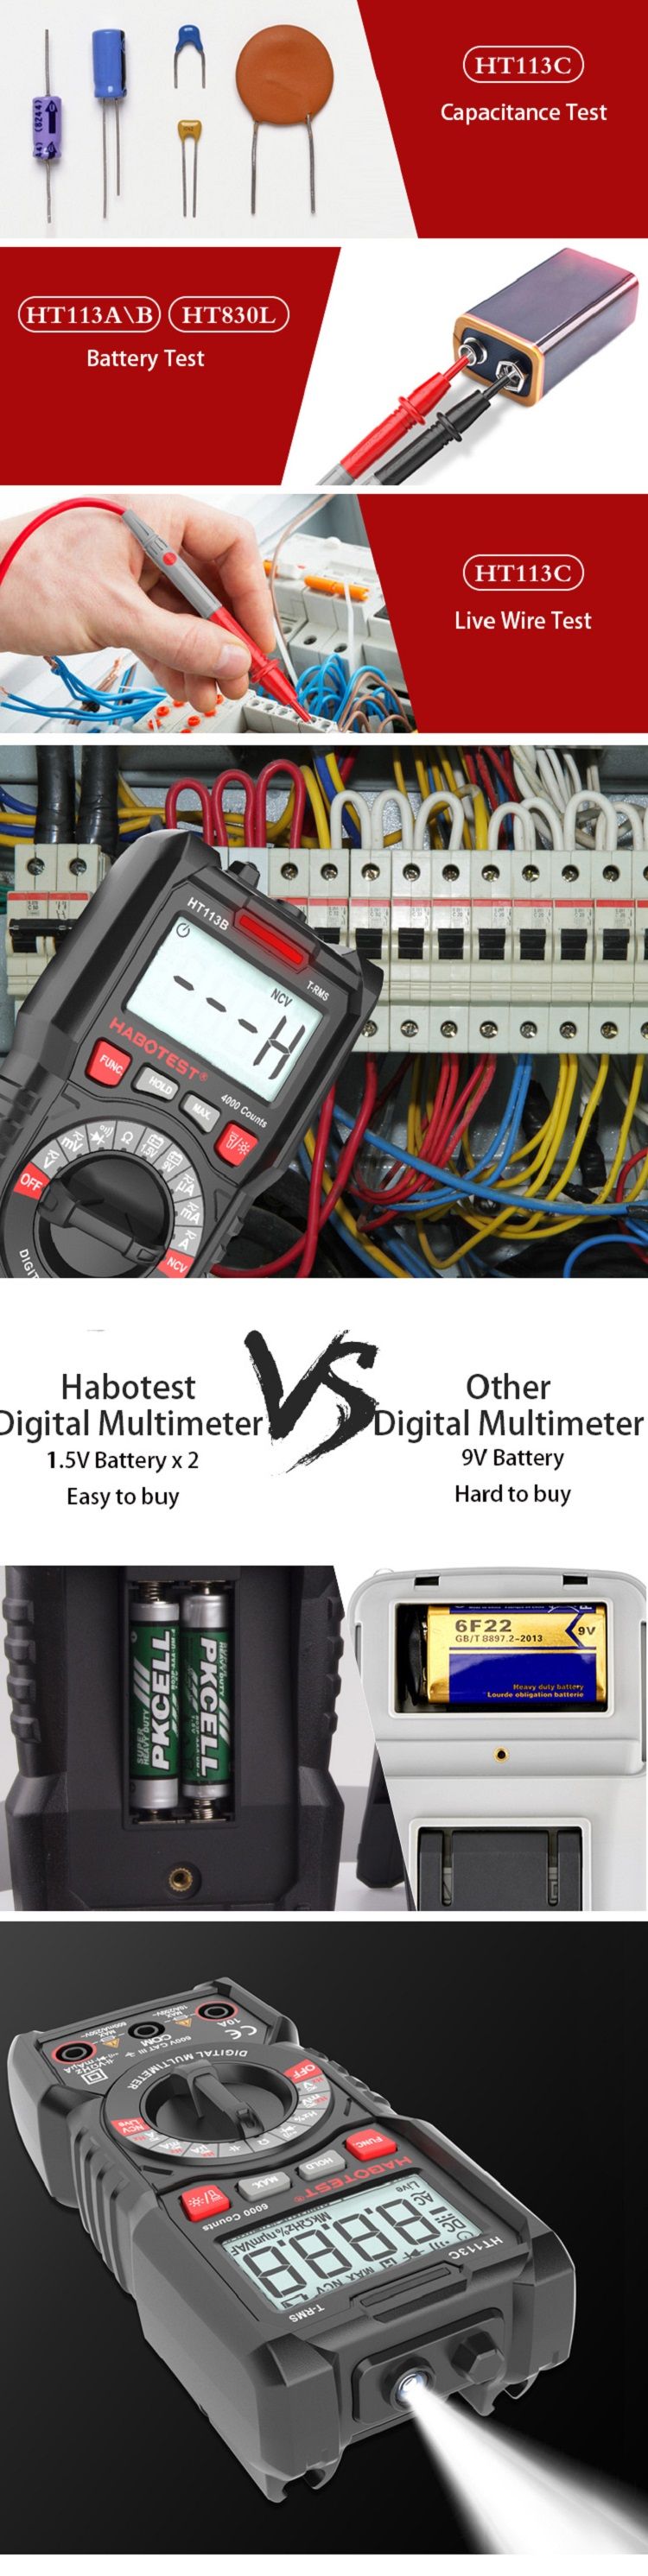 HT830l-HT113ABC-High-Precision-Digital-Profissional-Multimeter-DCAC-Voltage-Current-Meter-Handheld-D-1616481